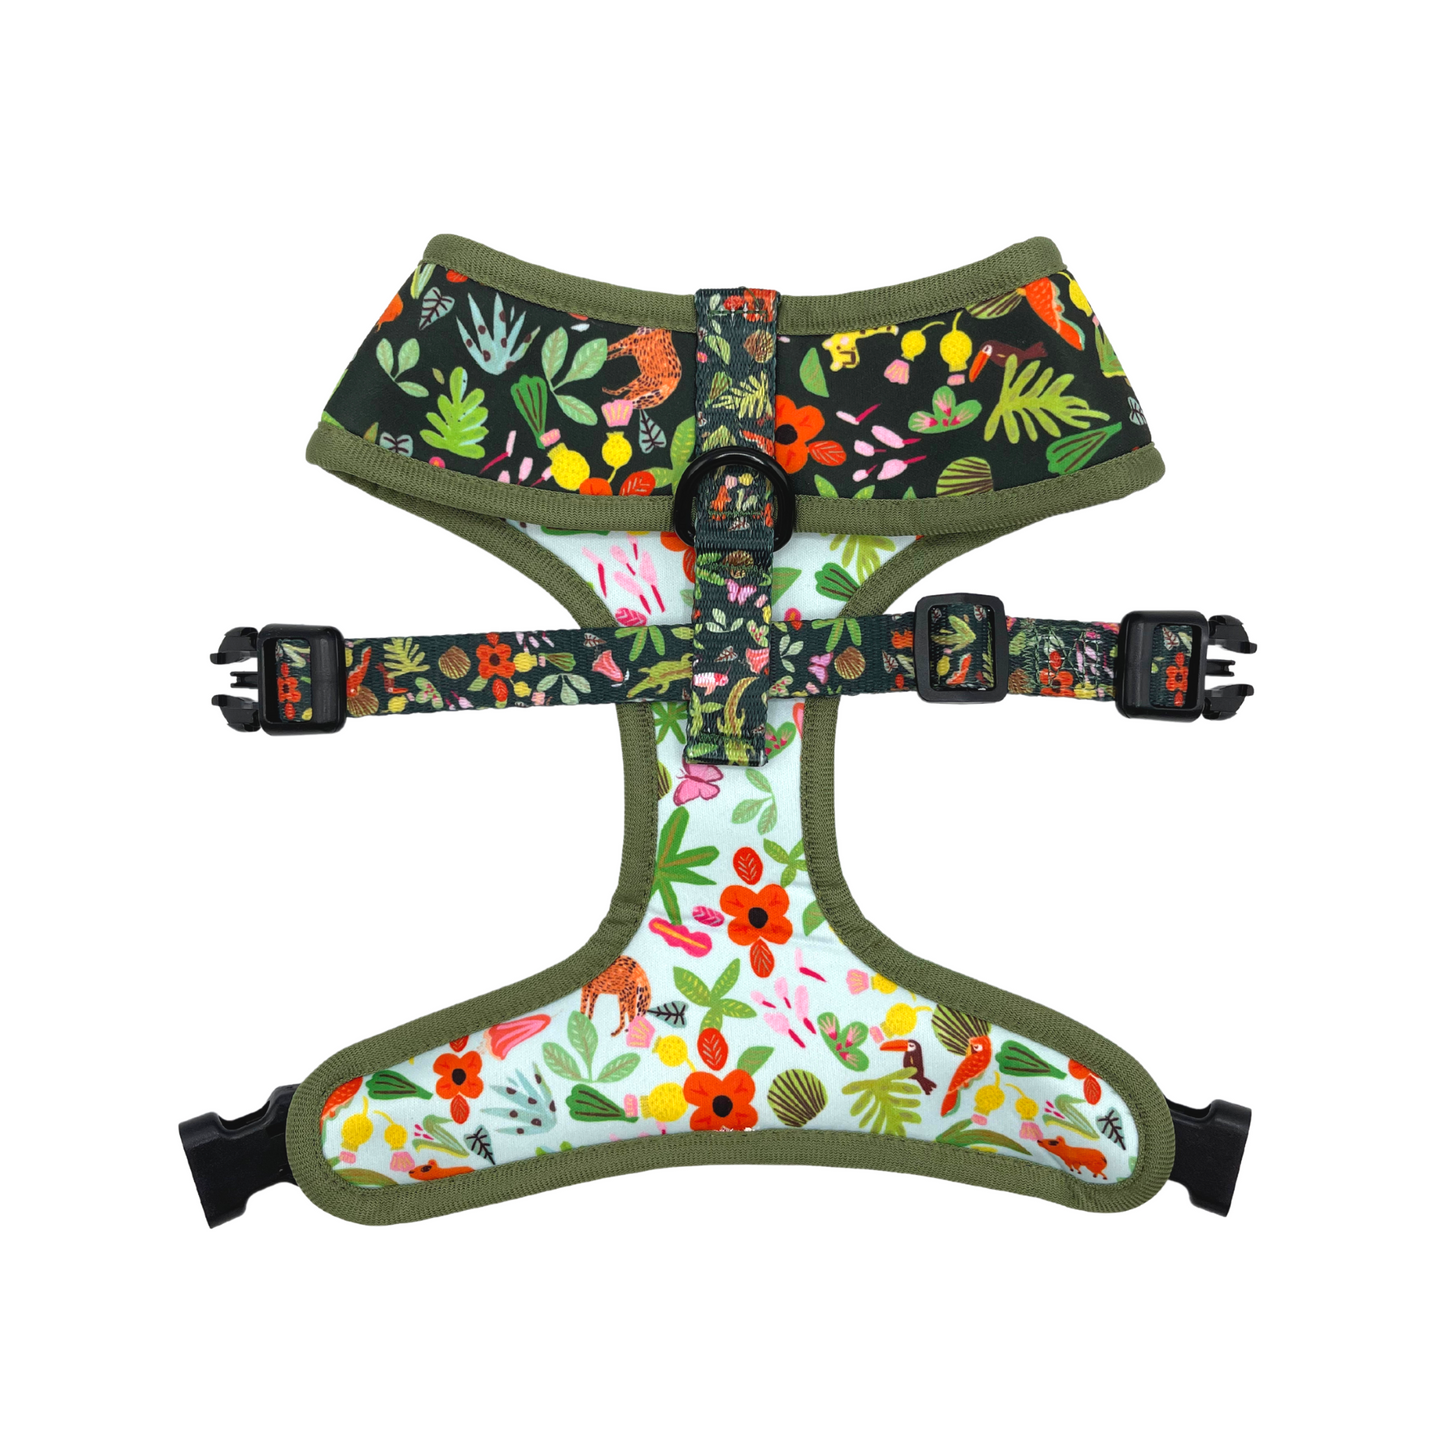 Pata Paw x Holalola reversible dog harness showing its backside